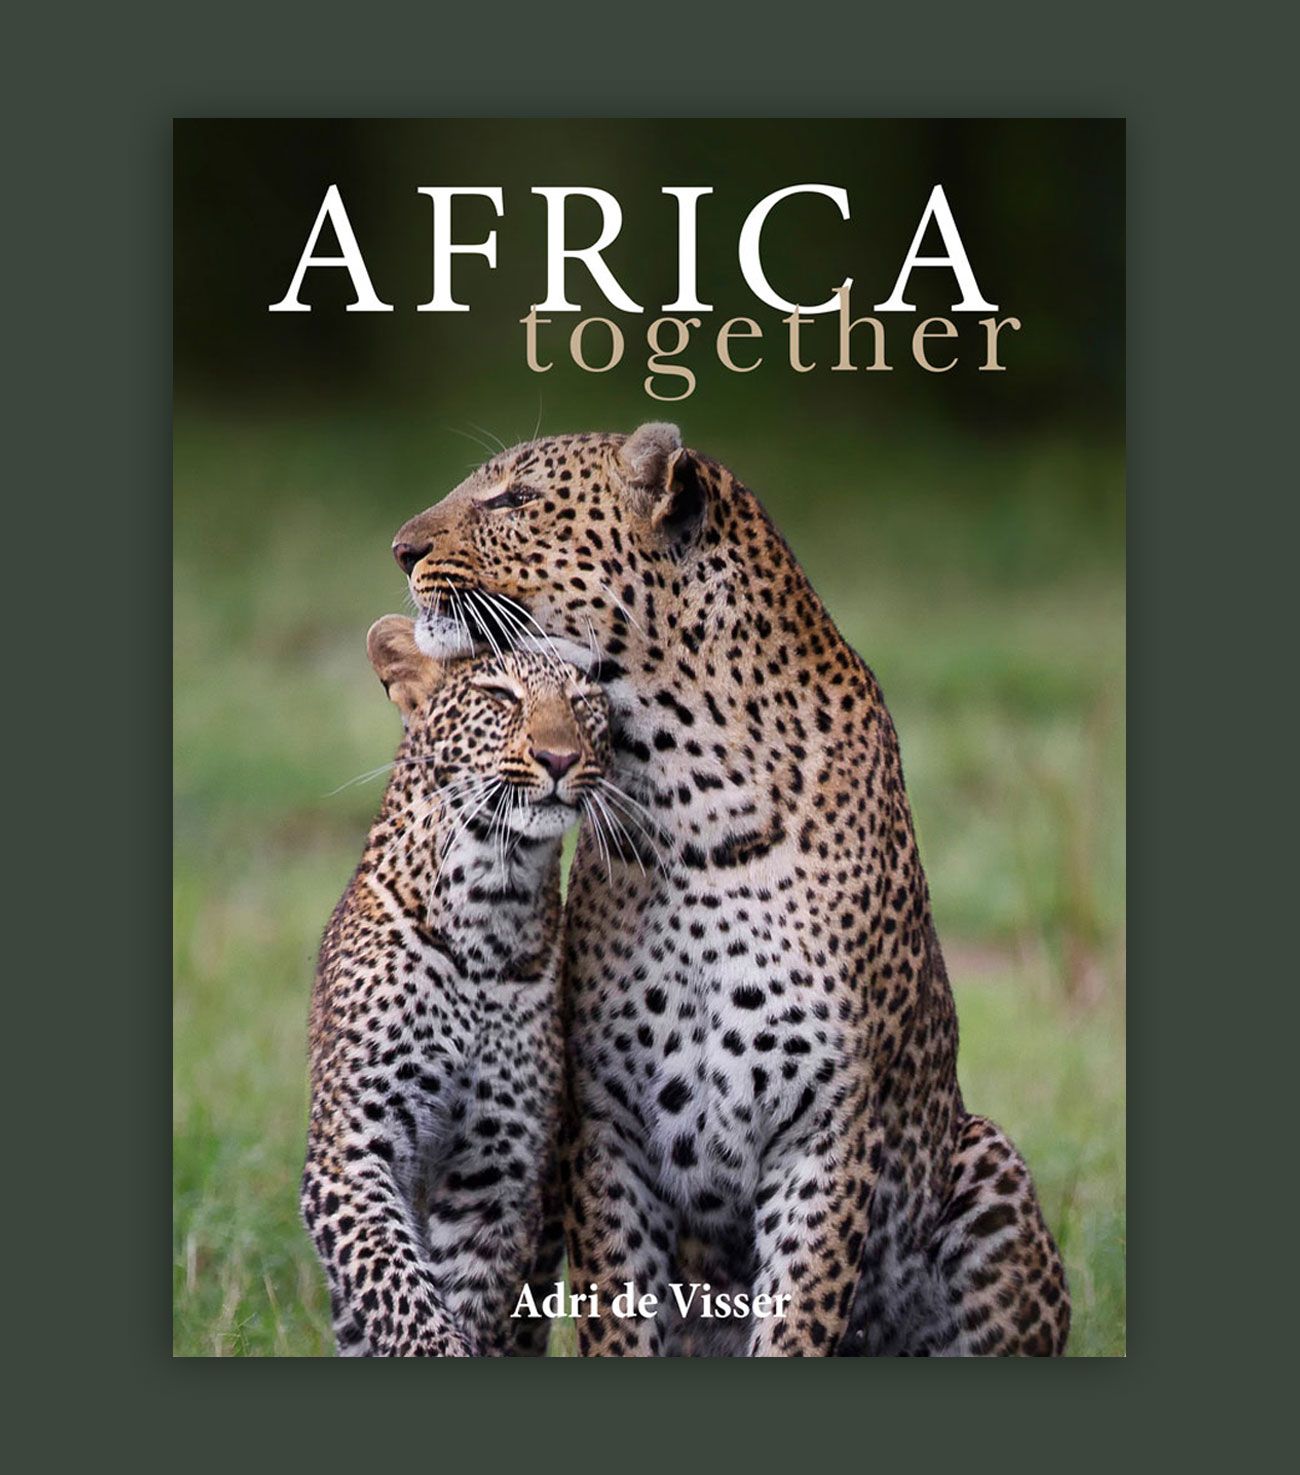 Africa together; Africa; Africa; Adri de visser; beroving in Kenia; Kenya; Wildlife; Kenia wildlife; zes kogels